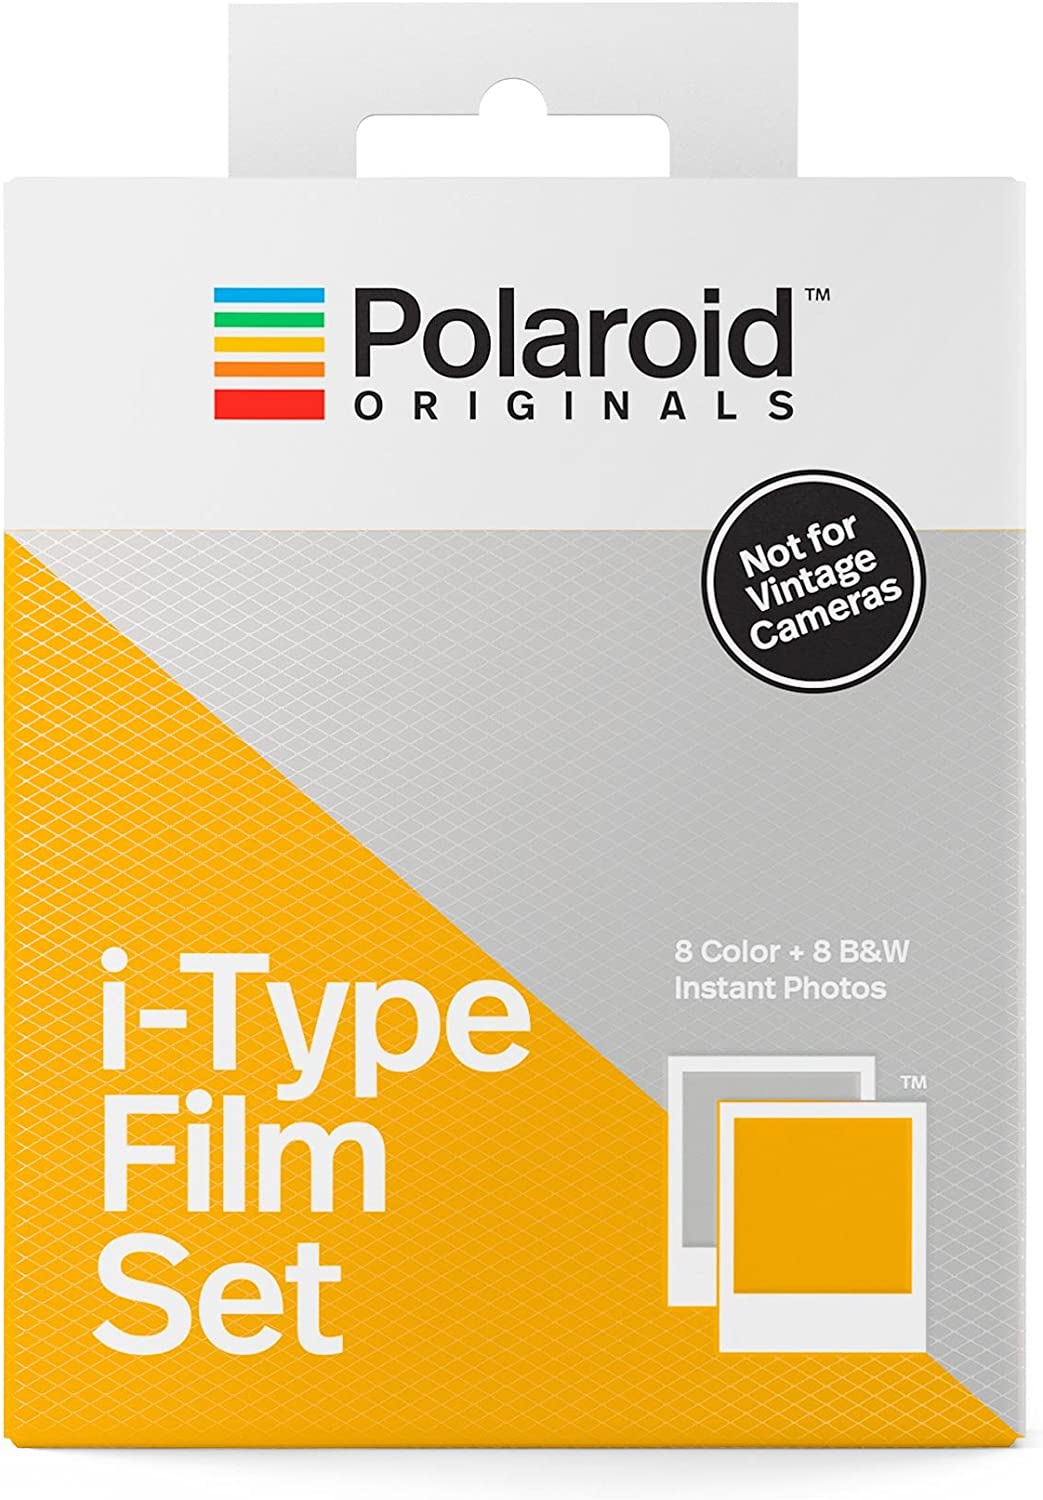 Product Image of Polaroid i-Type Instant Film Set White frame 1 Colour & 1 B&W